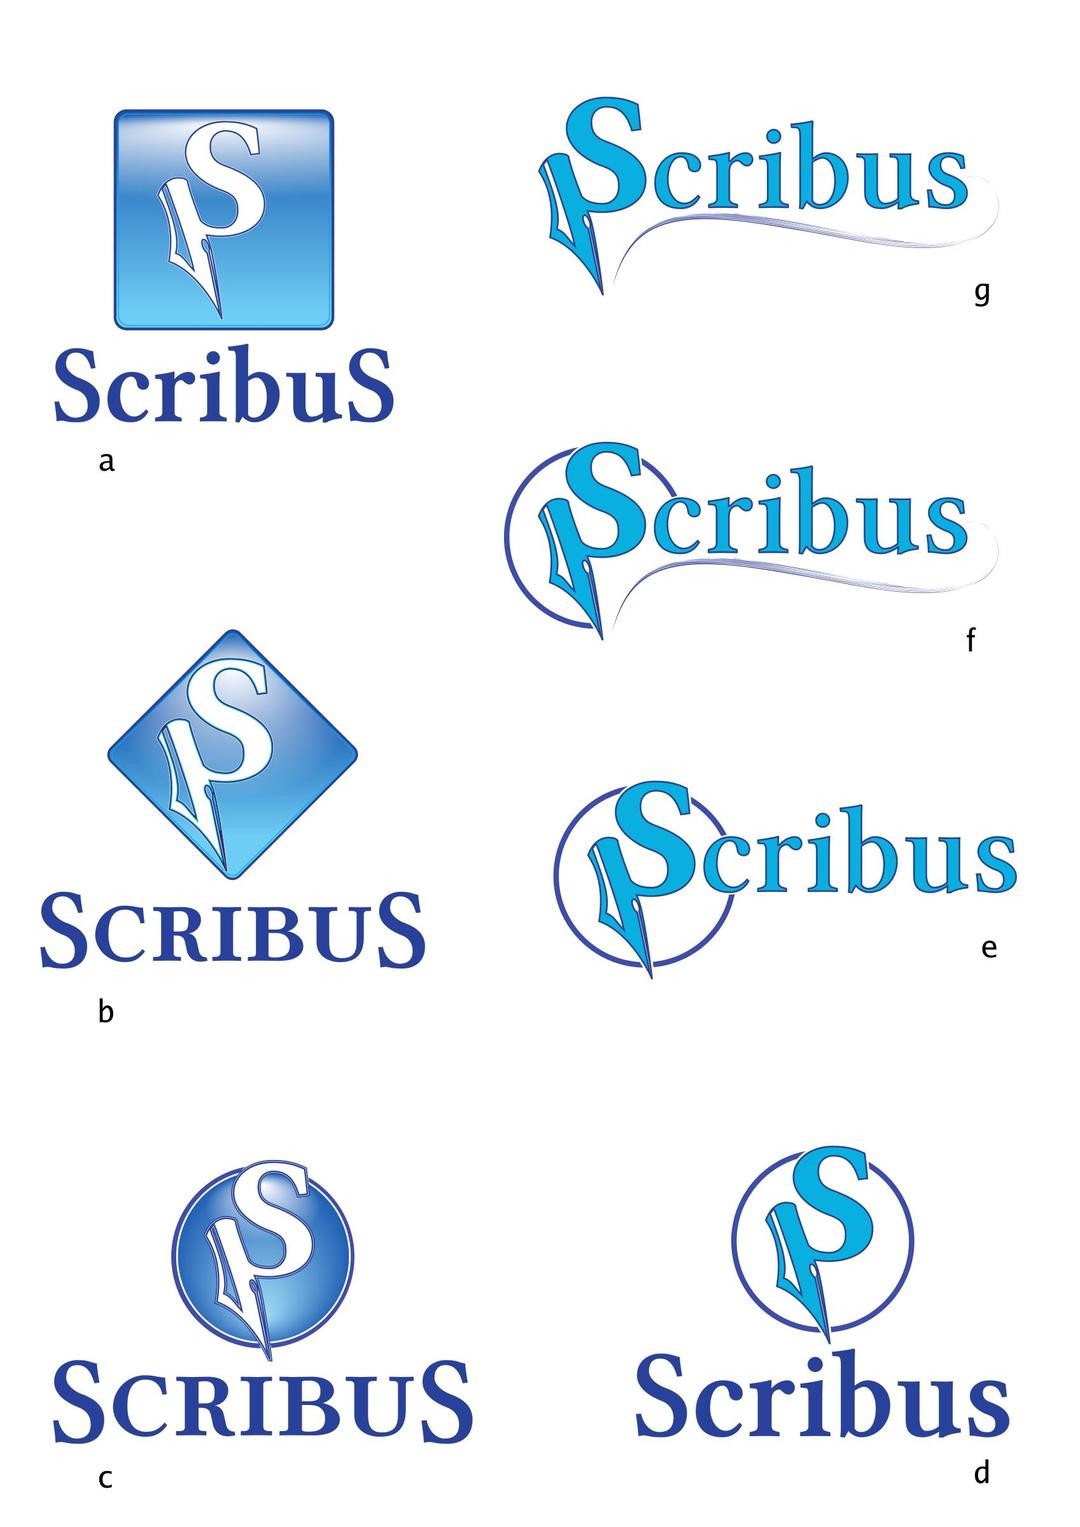 scribus-logos-propose-mockups png transparent